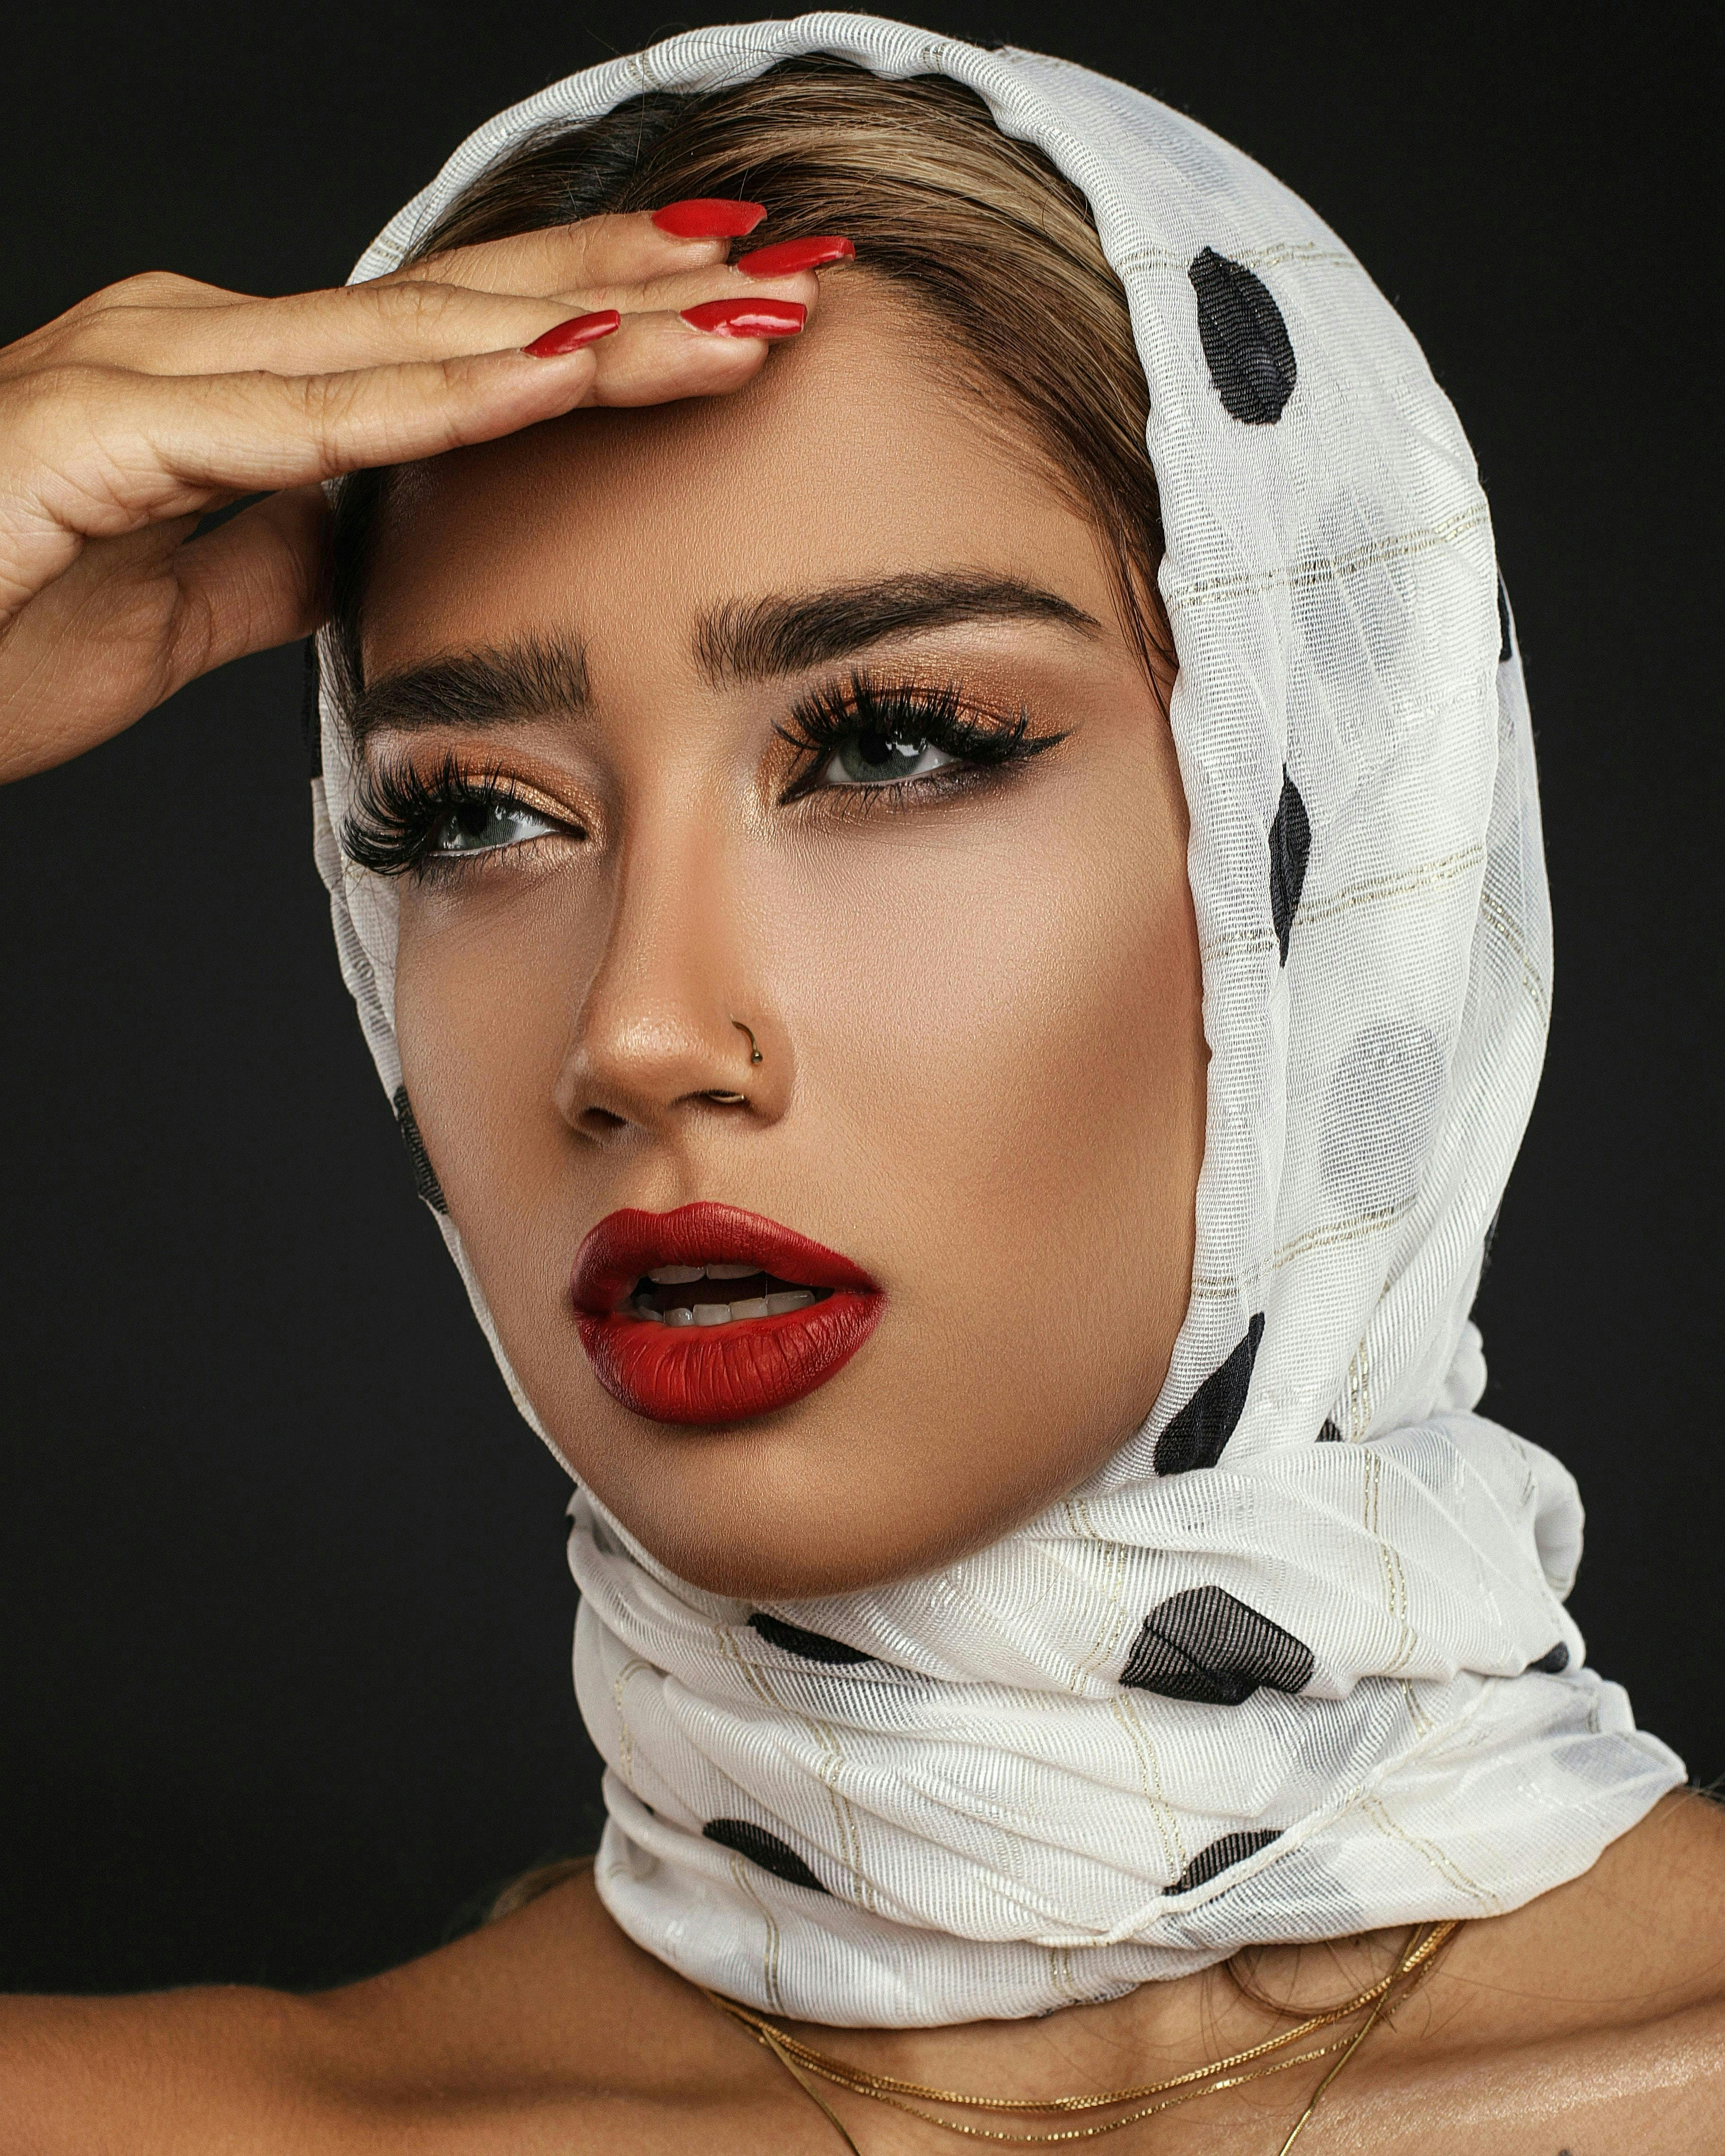 clothing apparel face person human bonnet hat lipstick cosmetics